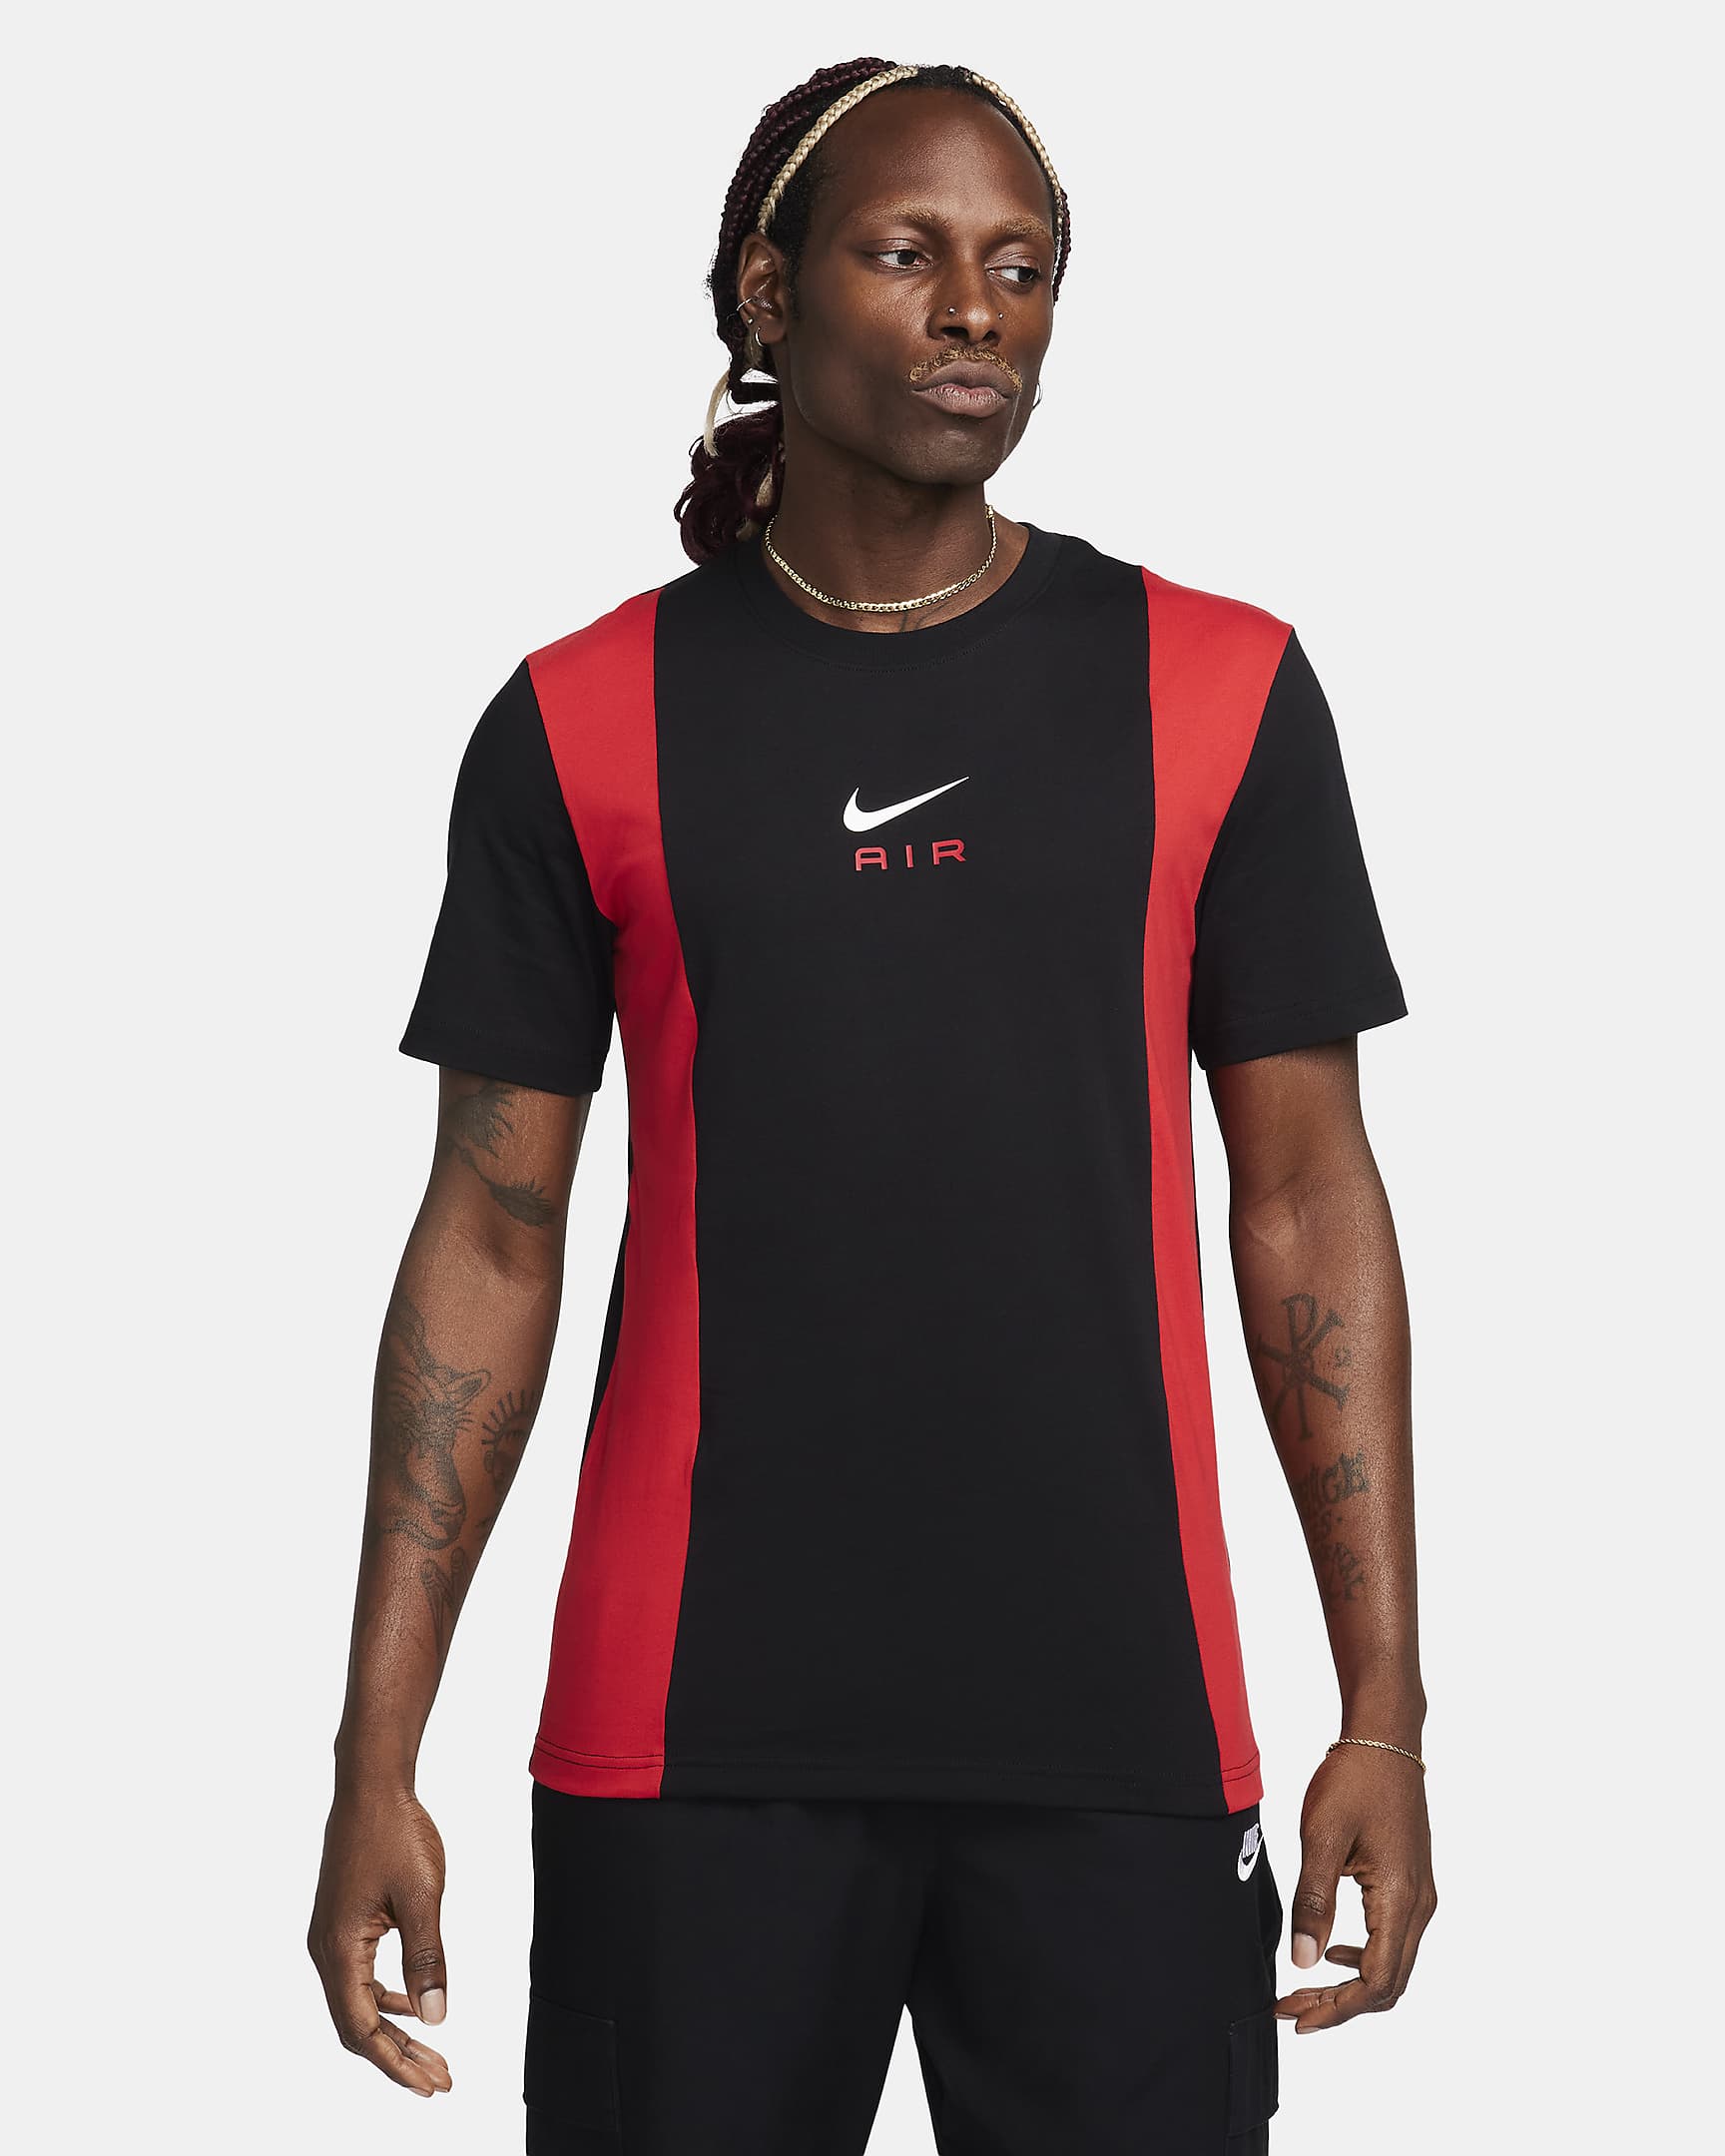 Nike Air Men's Short-Sleeve Top. Nike CH